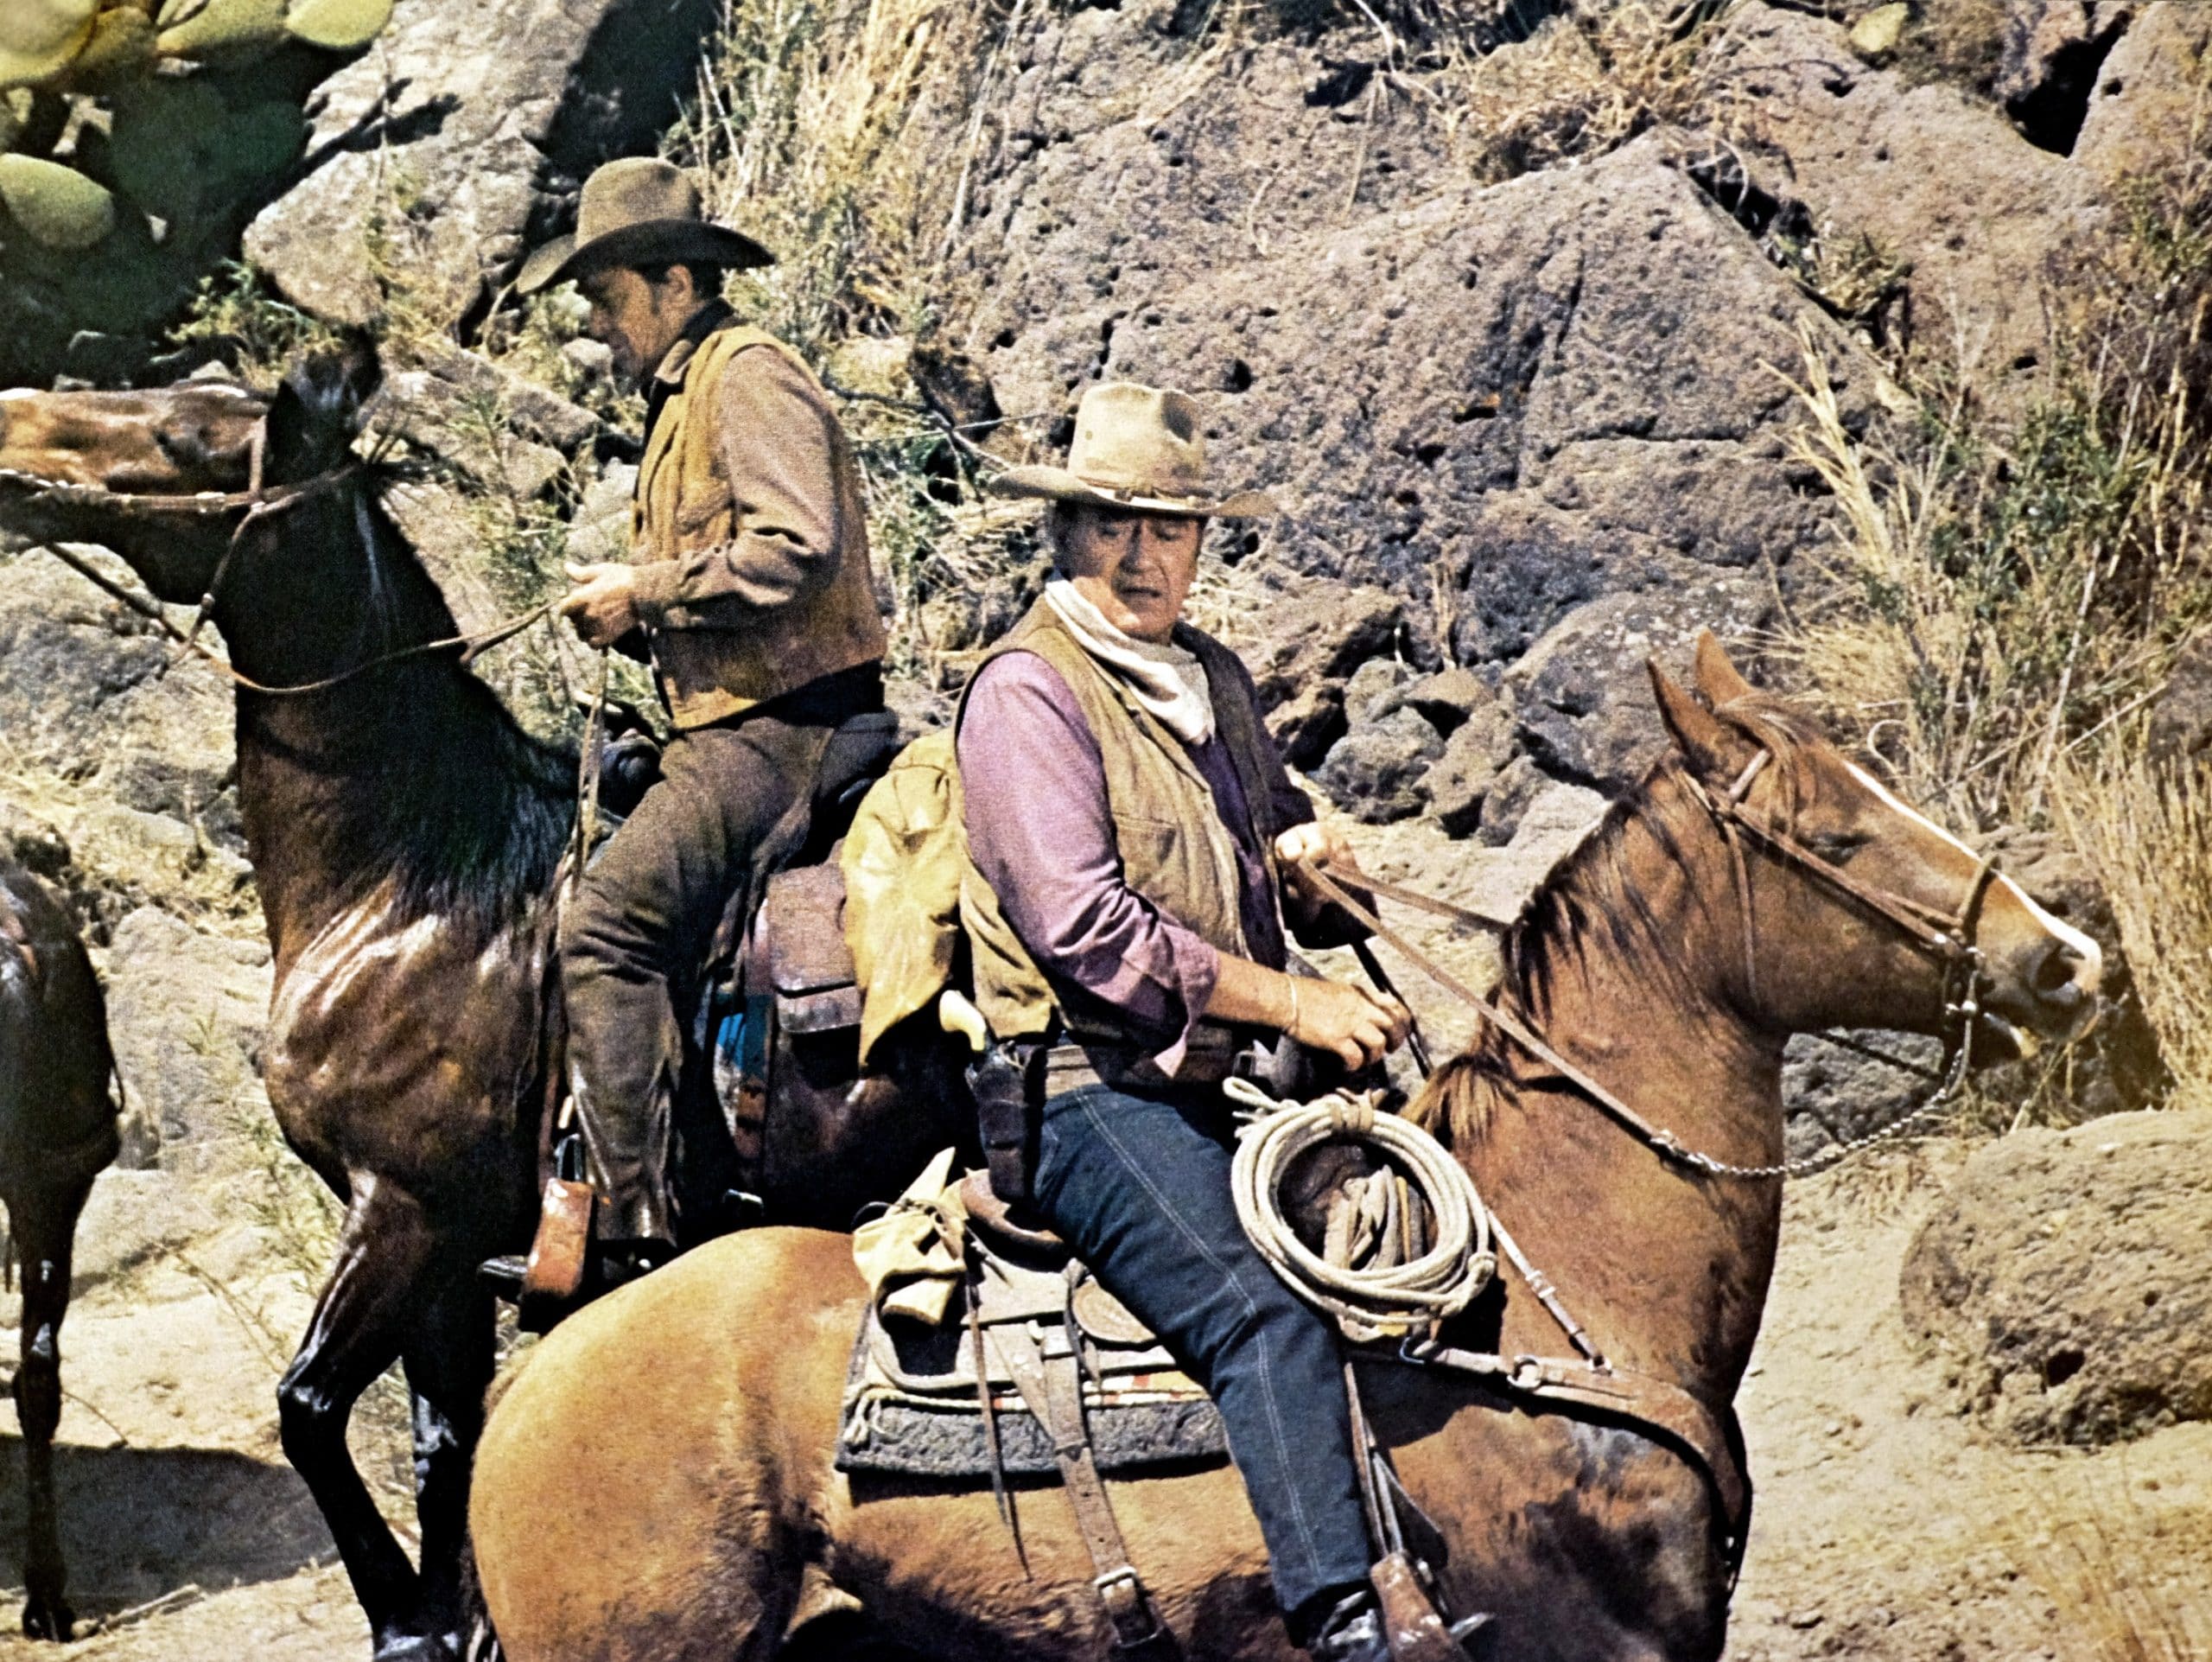 THE TRAIN ROBBERS, from left, Rod Taylor, John Wayne, 1973 